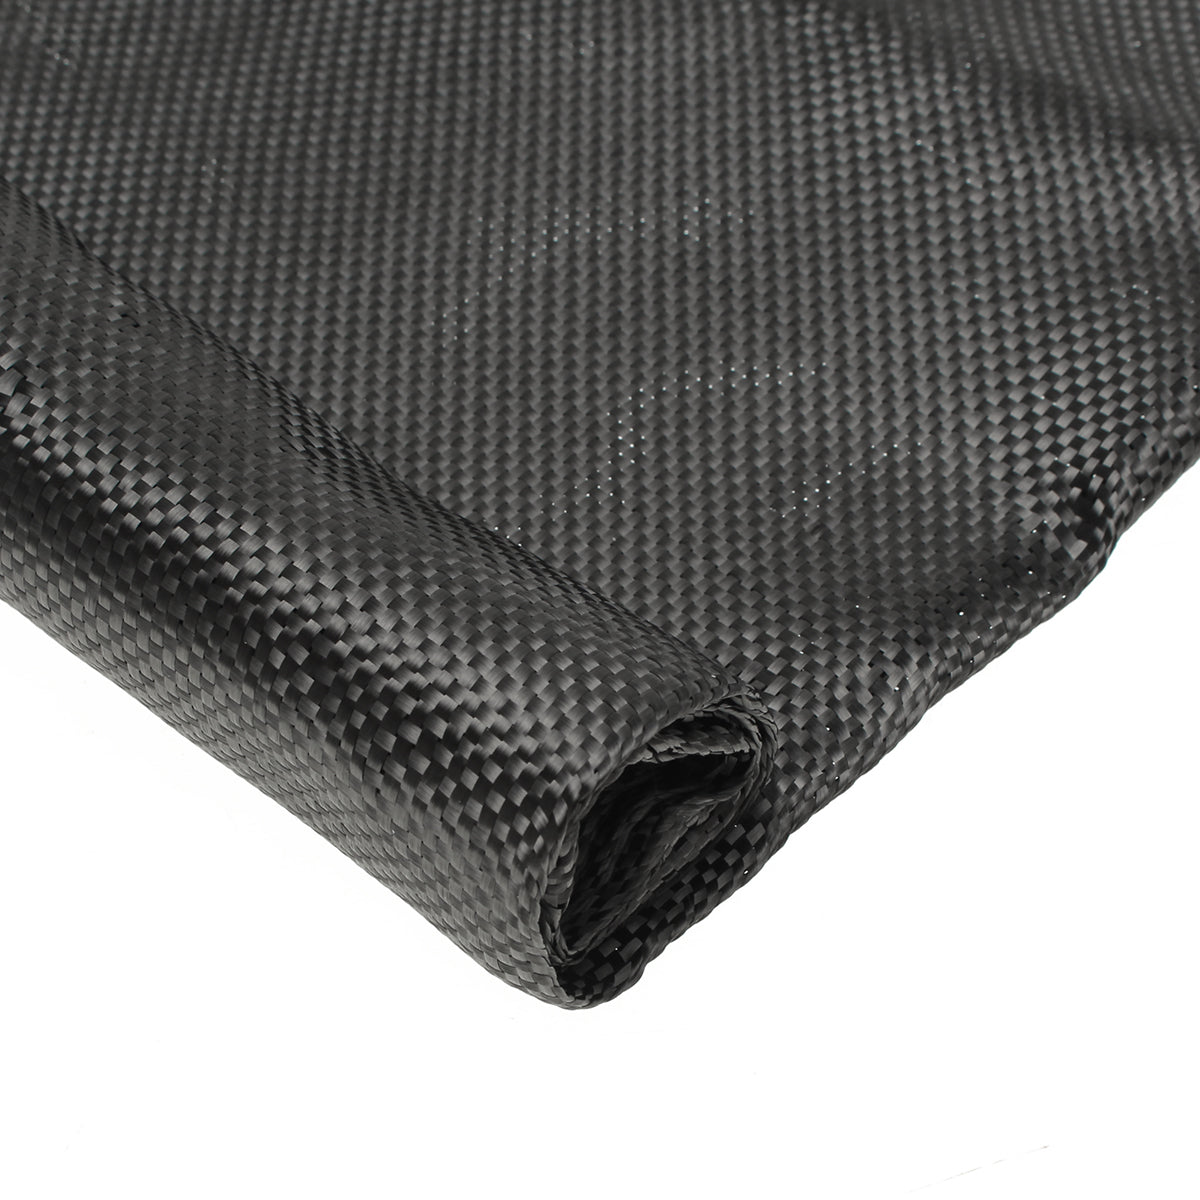 Dark Slate Gray 3K 200gsm Carbon Fiber/Fibre Cloth Black Cloth Fabric Twill Weave